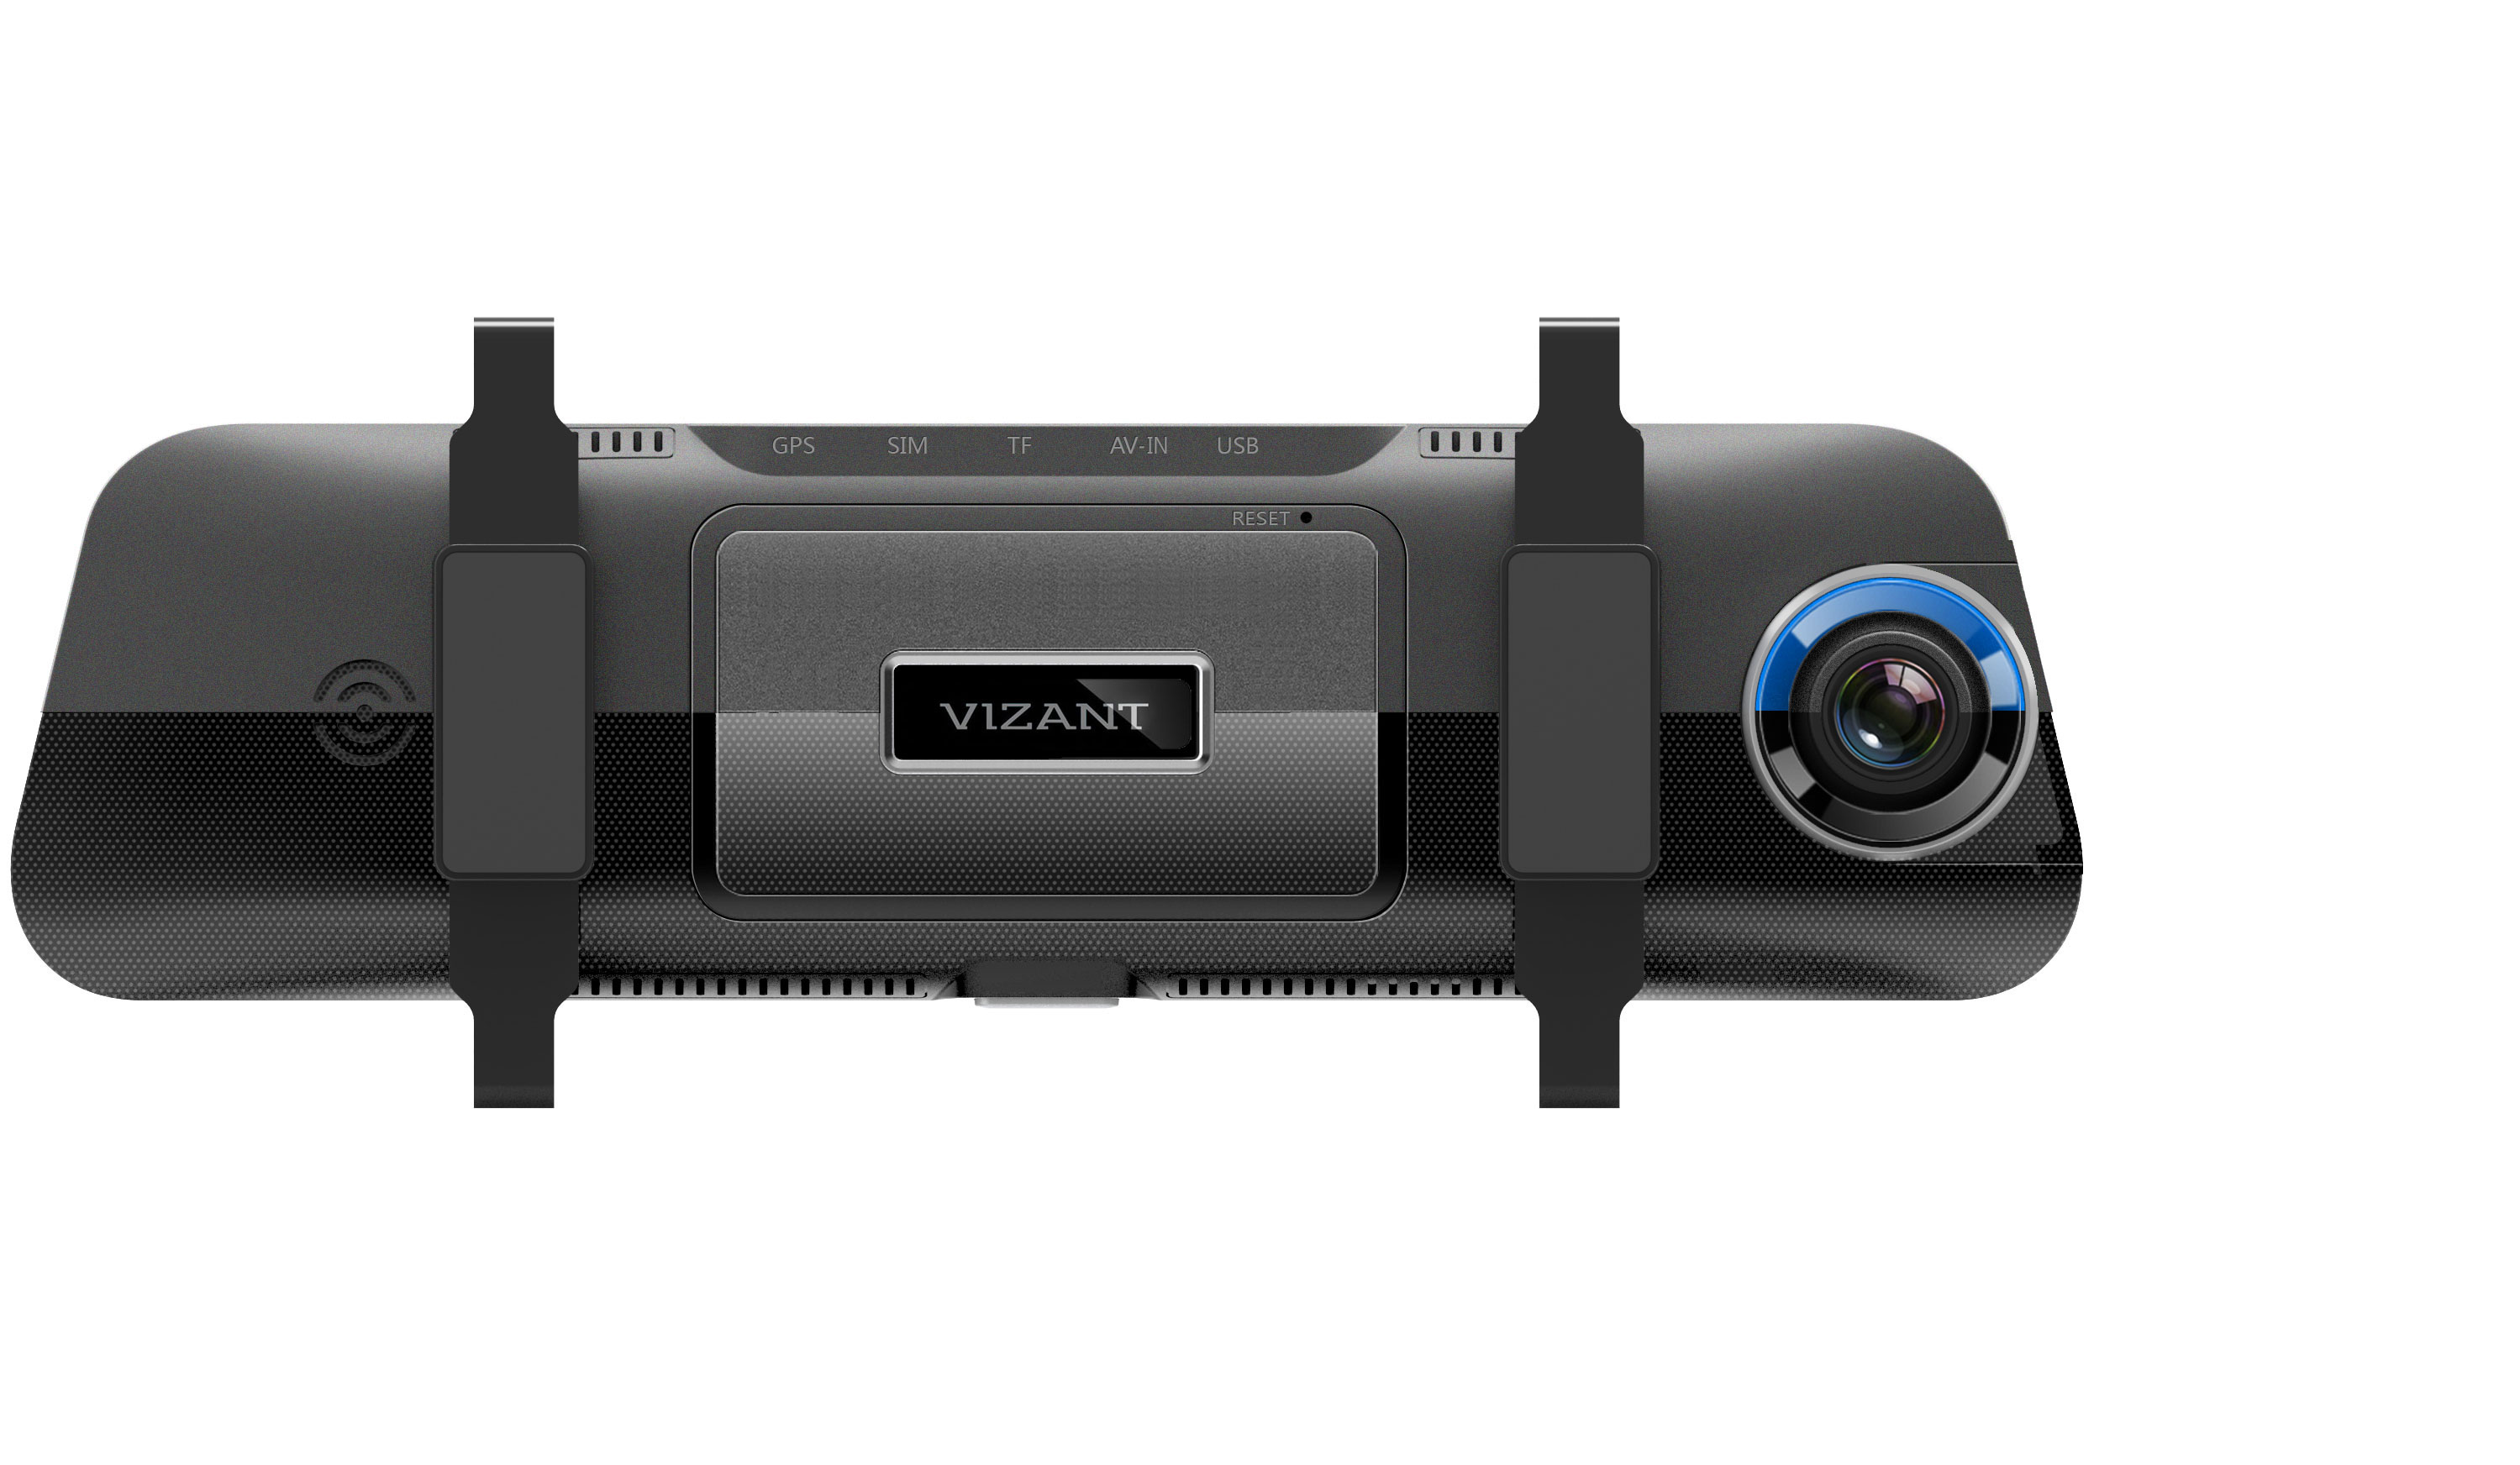  Vizant-250 Assist Full HD 1080P c 2-    